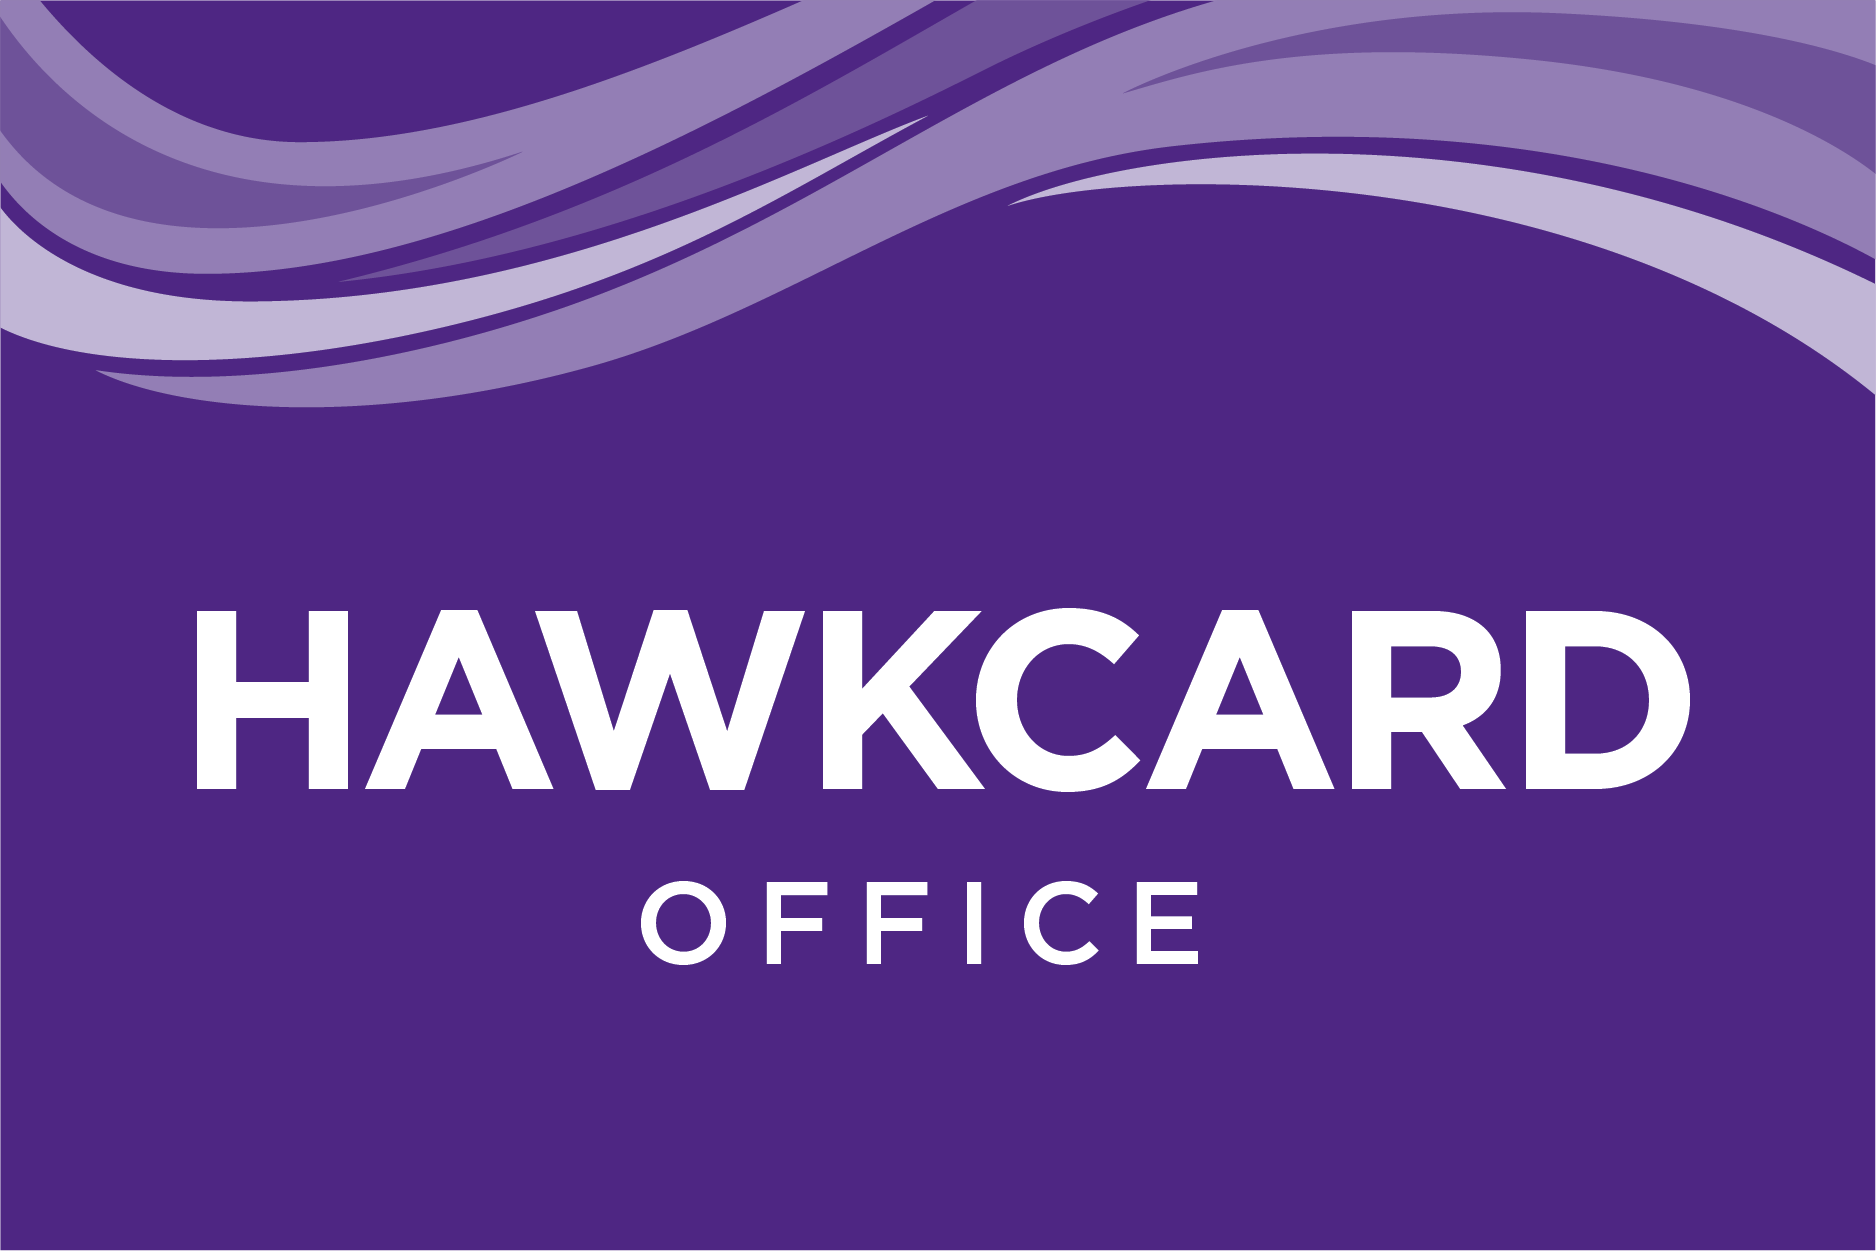 HawkCard office